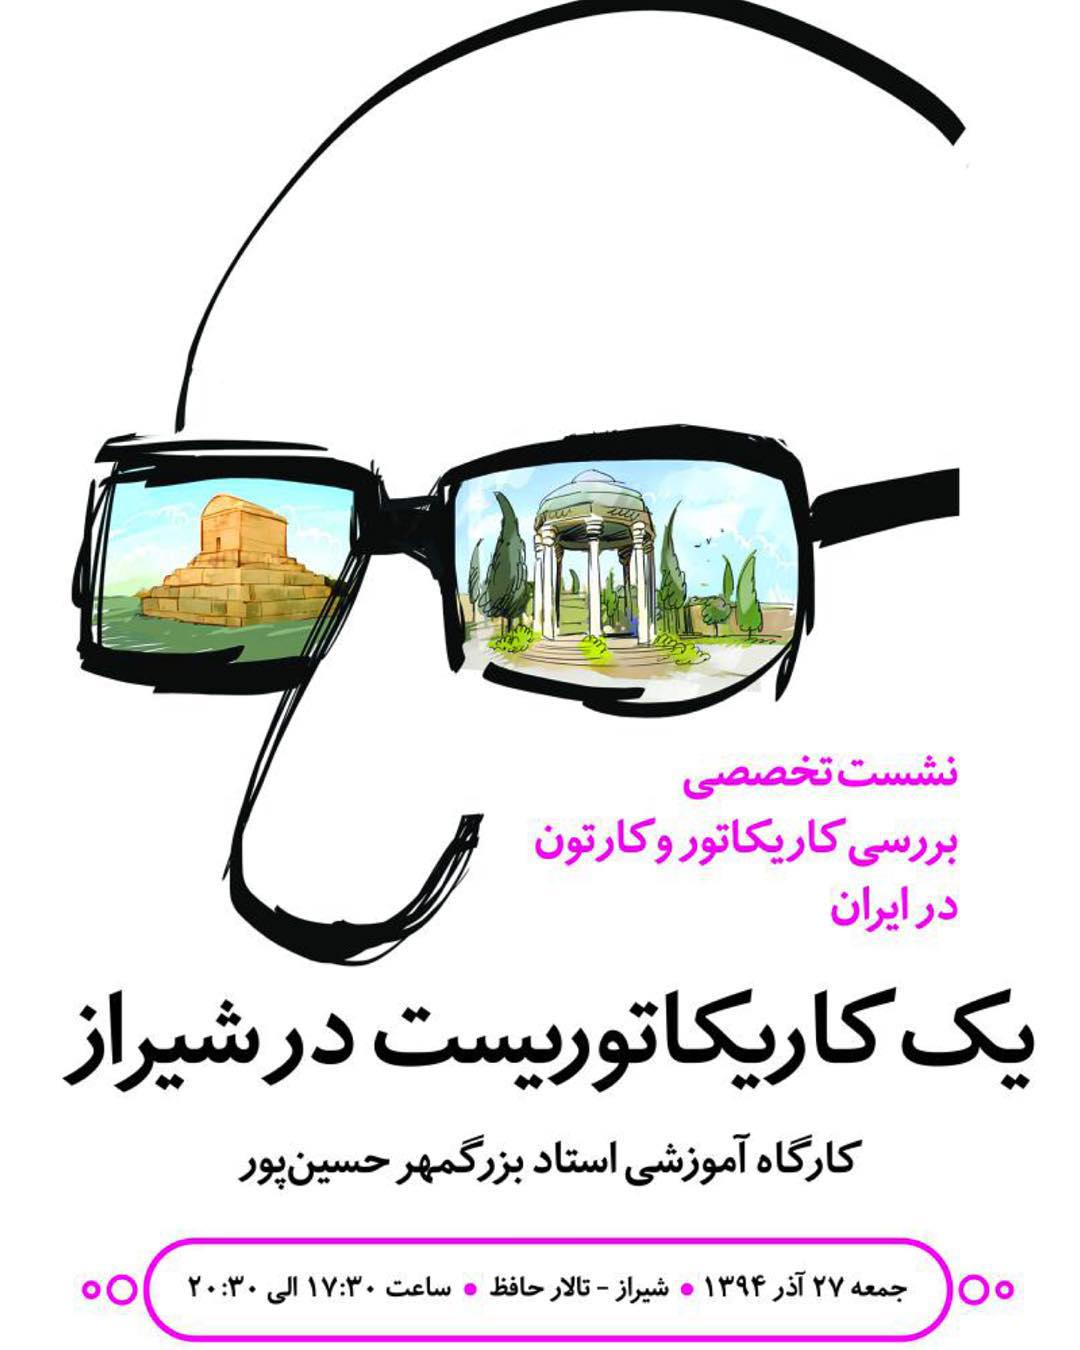 A Cartoonist in Shiraz